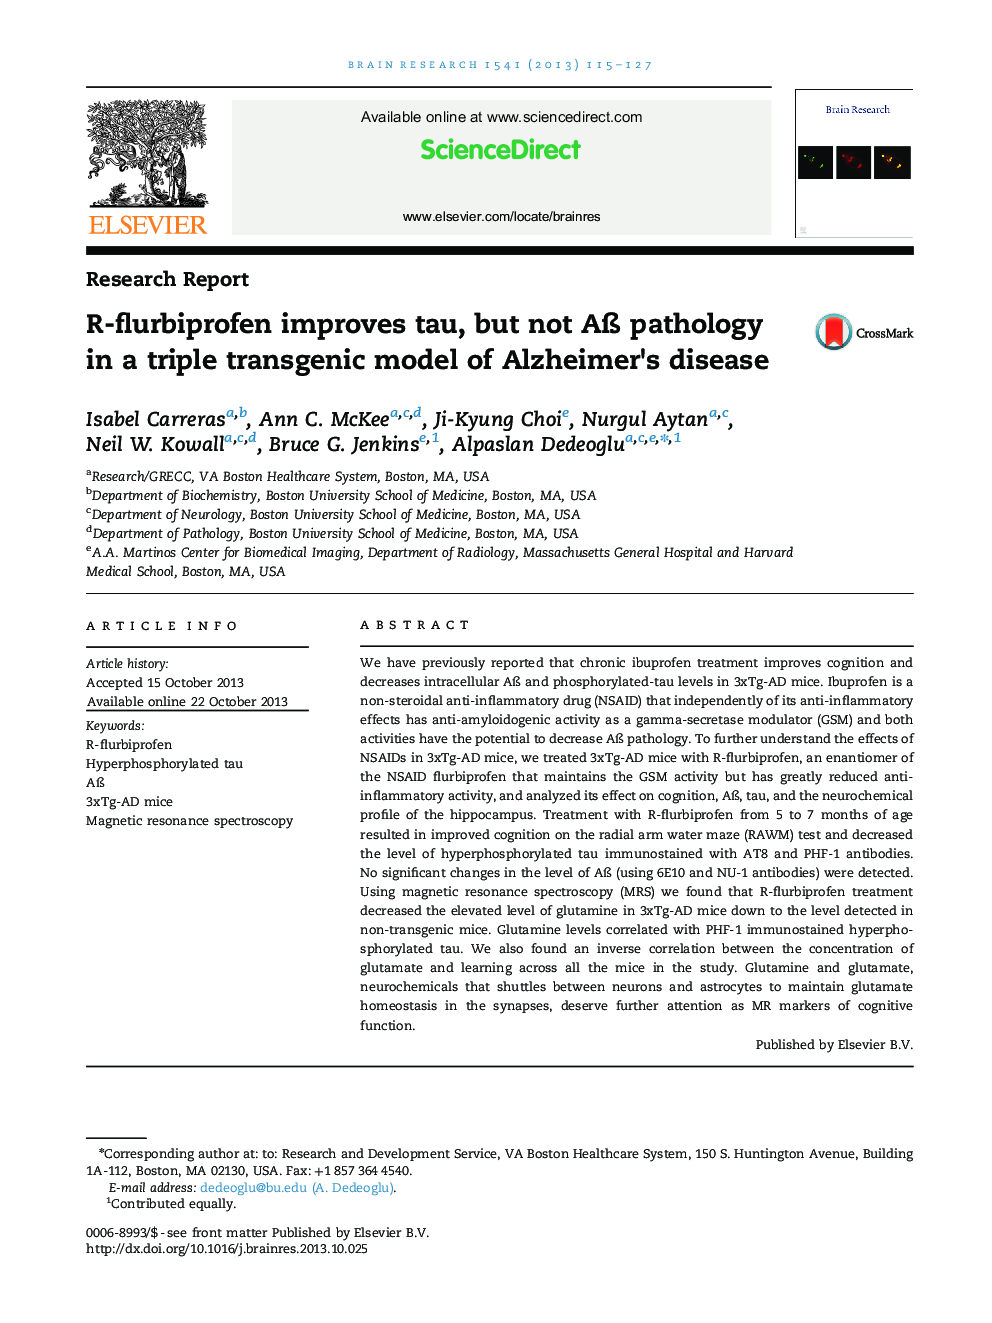 R-flurbiprofen improves tau, but not Aß pathology in a triple transgenic model of Alzheimer's disease